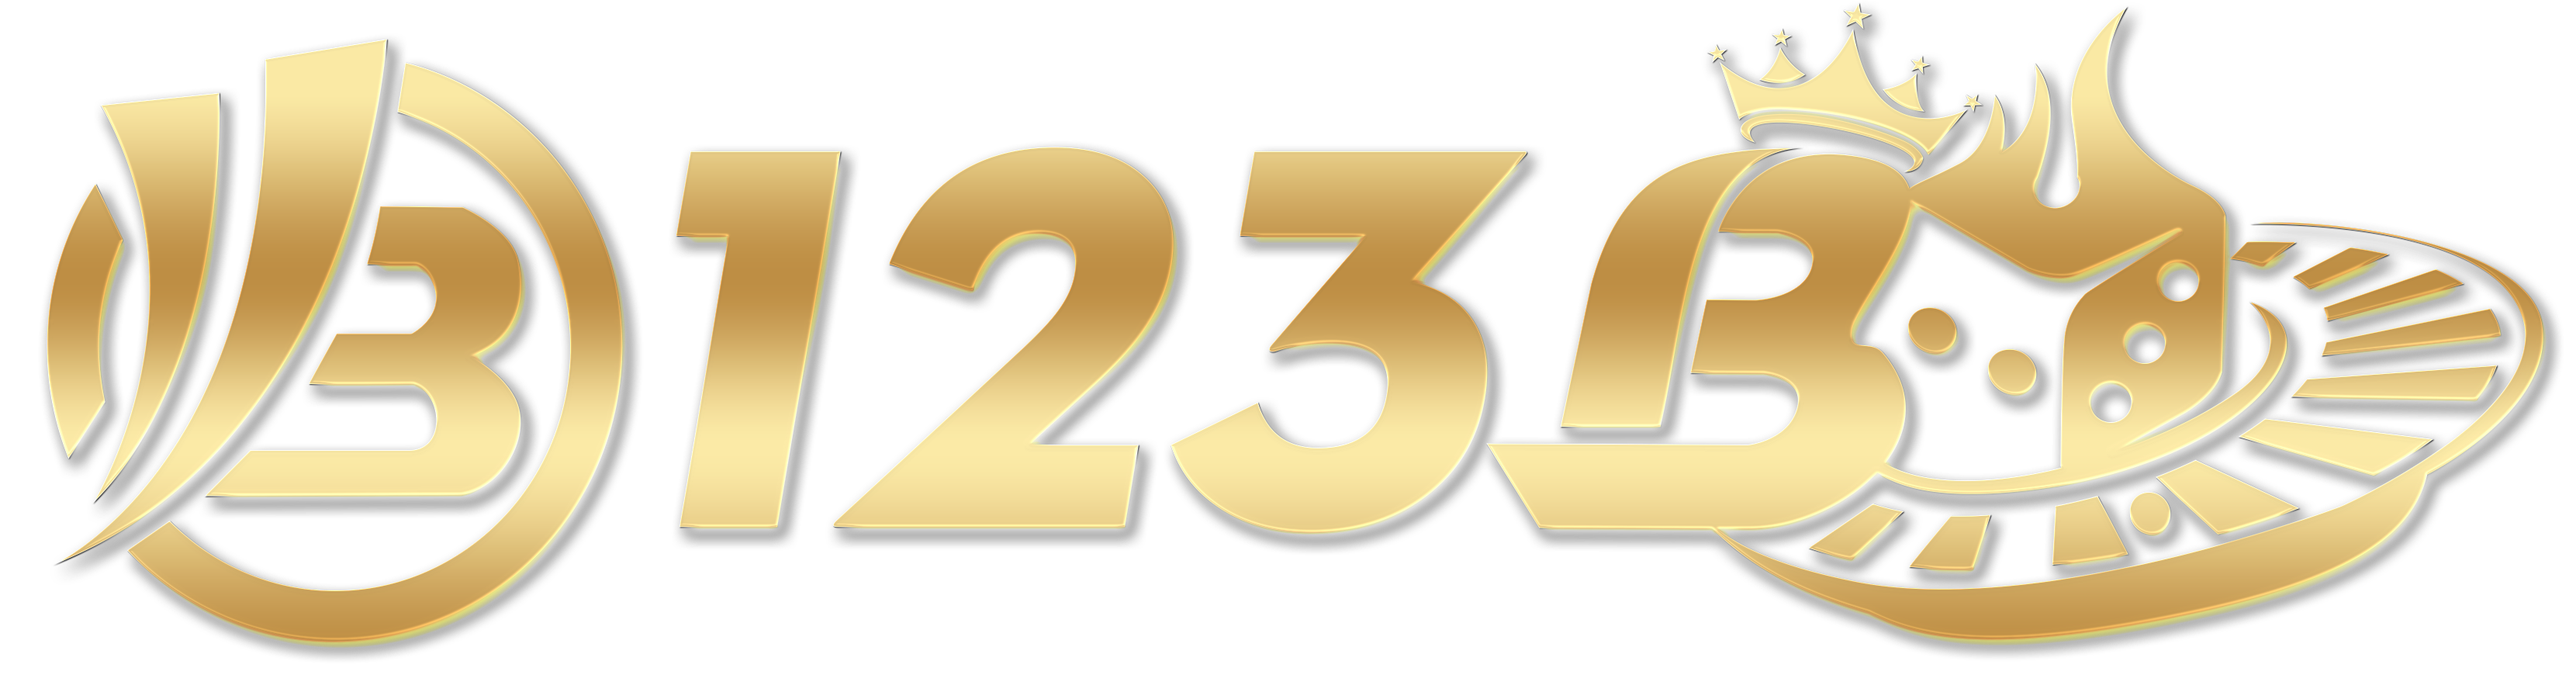 Logo 123b Reviews